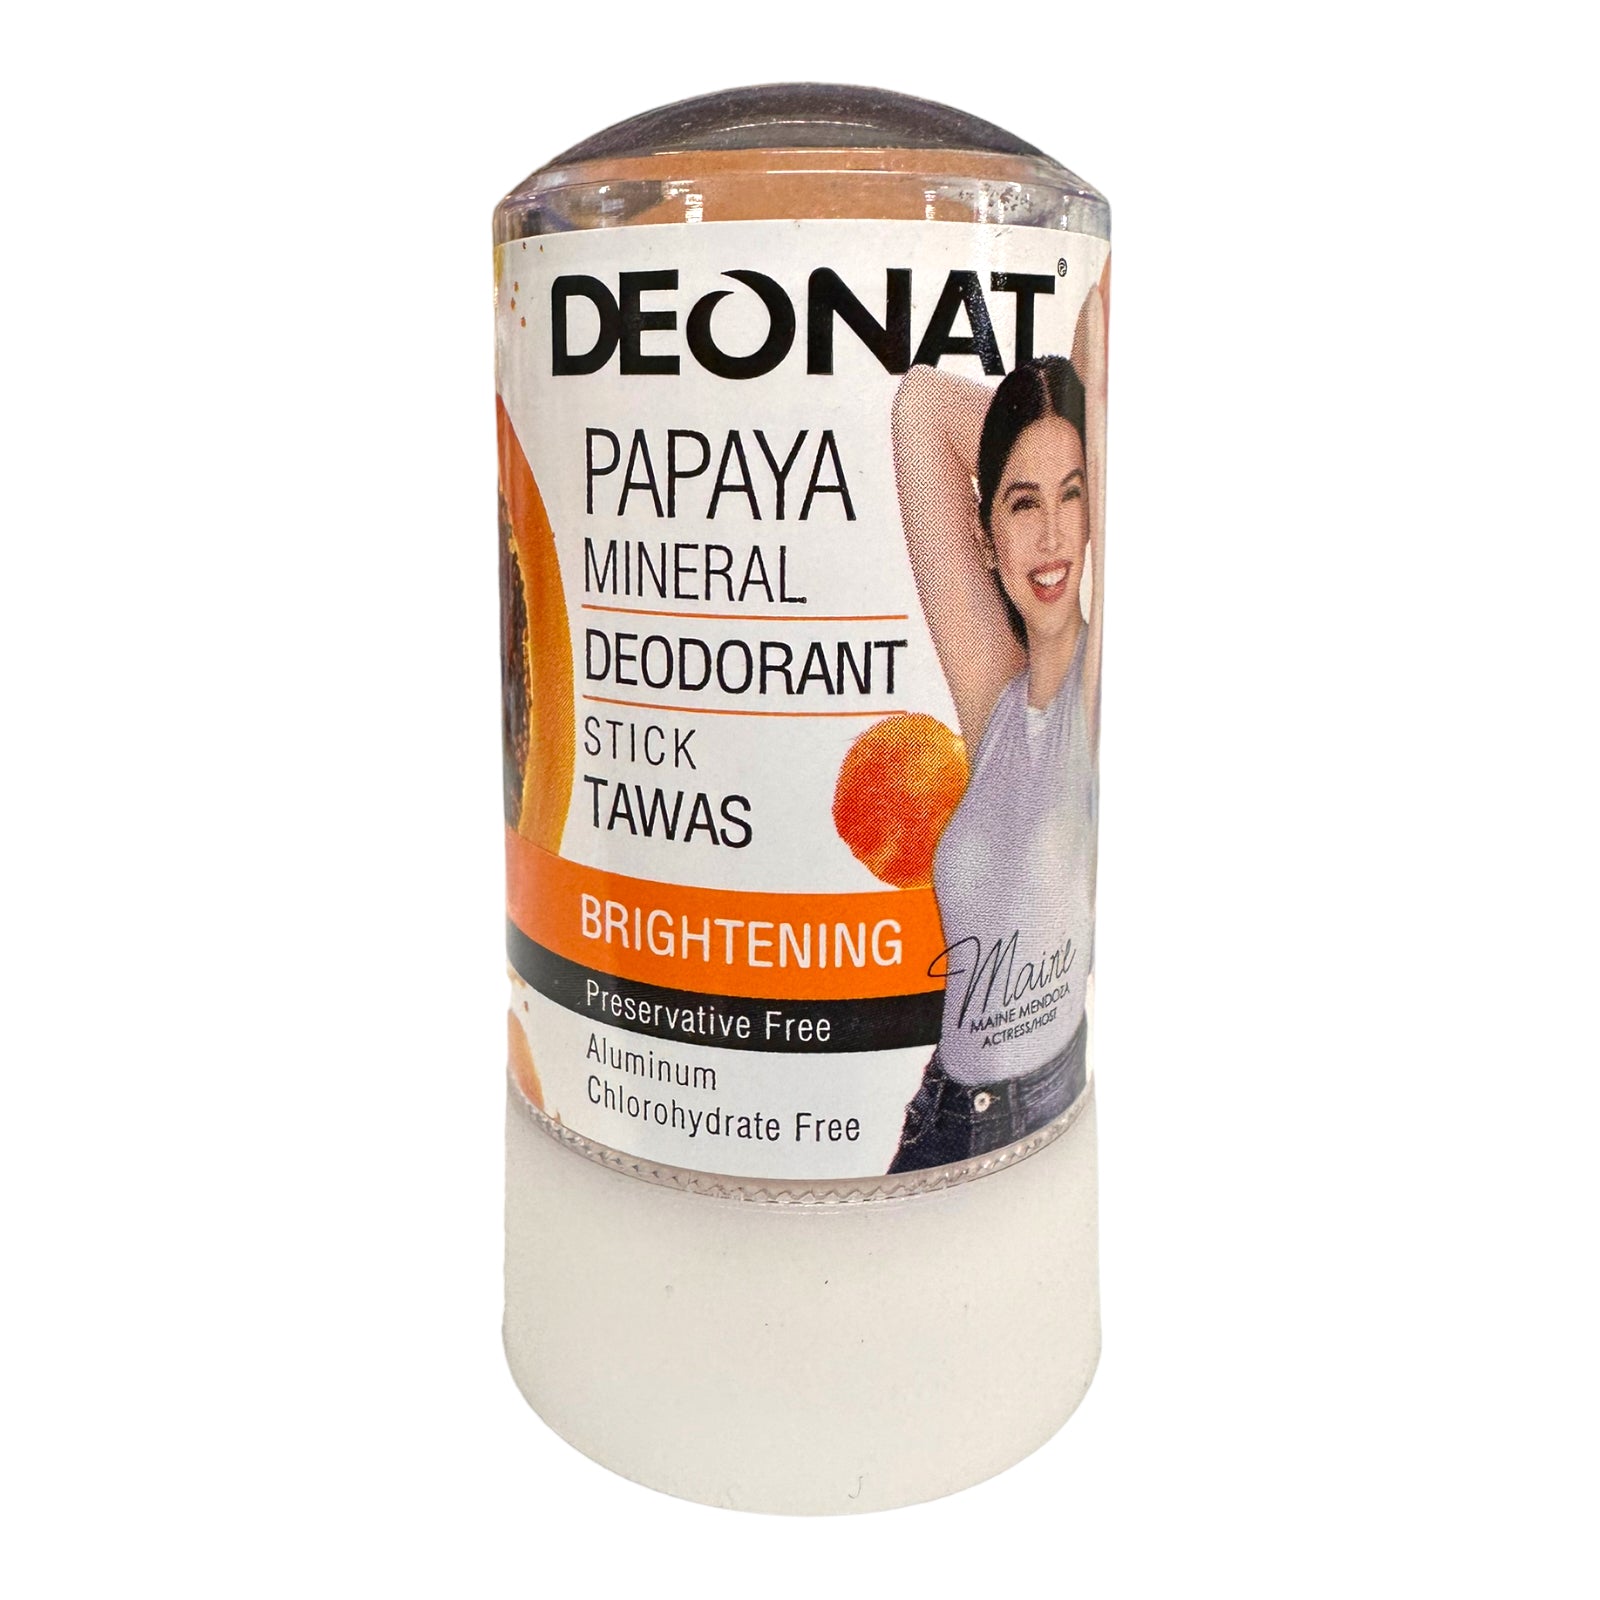 DEONAT Mineral Deodorant Stick Tawas 60g - PAPAYA - ( Orange )